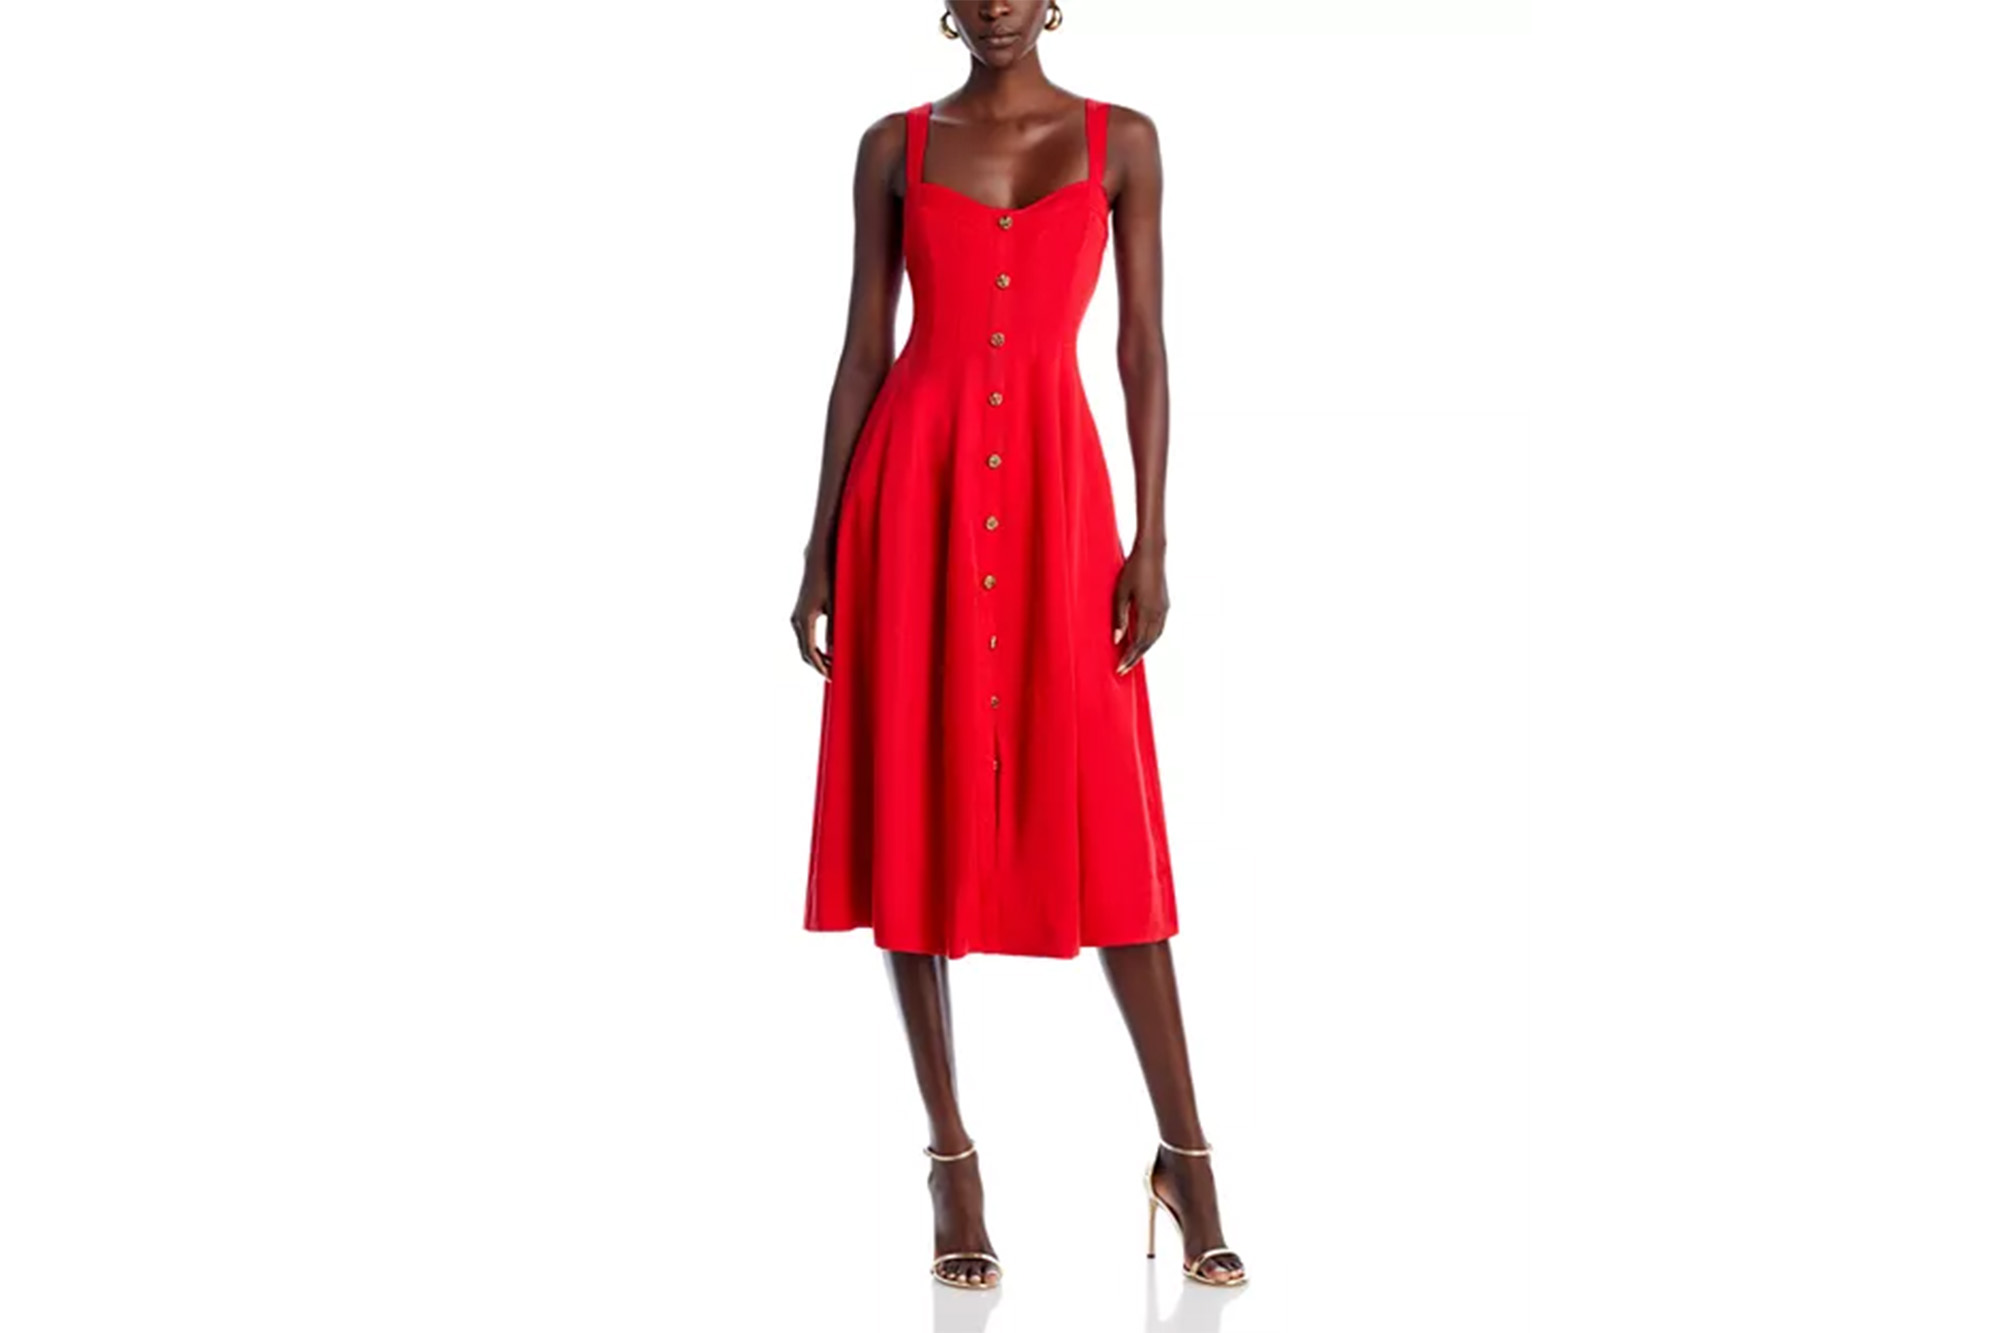 A model in a red dress